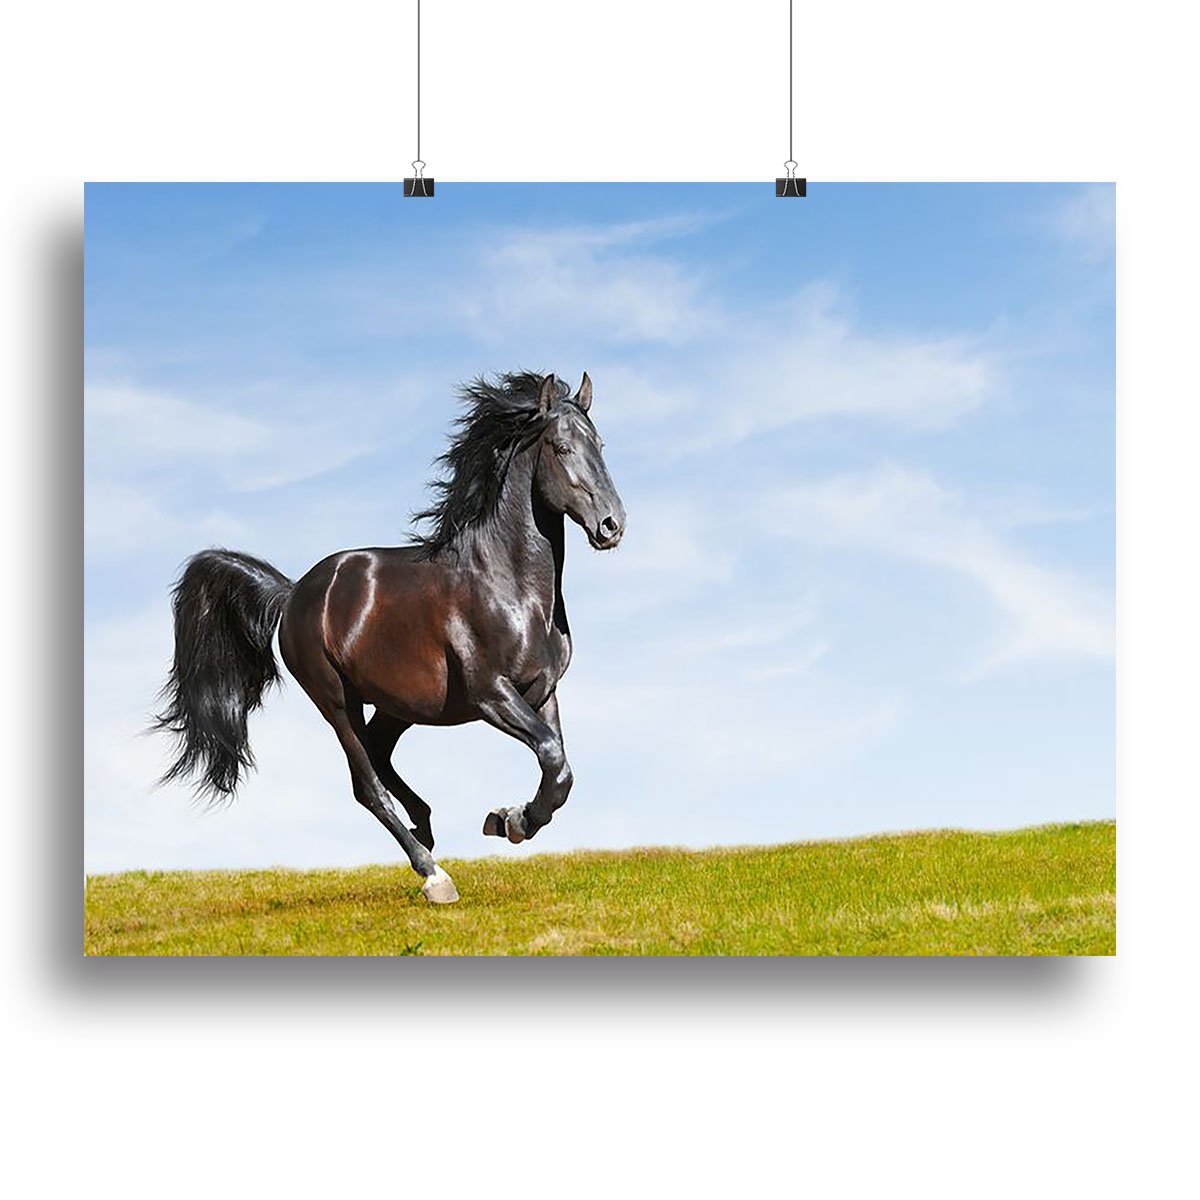 Black Kladruby horse rung gallop Canvas Print or Poster